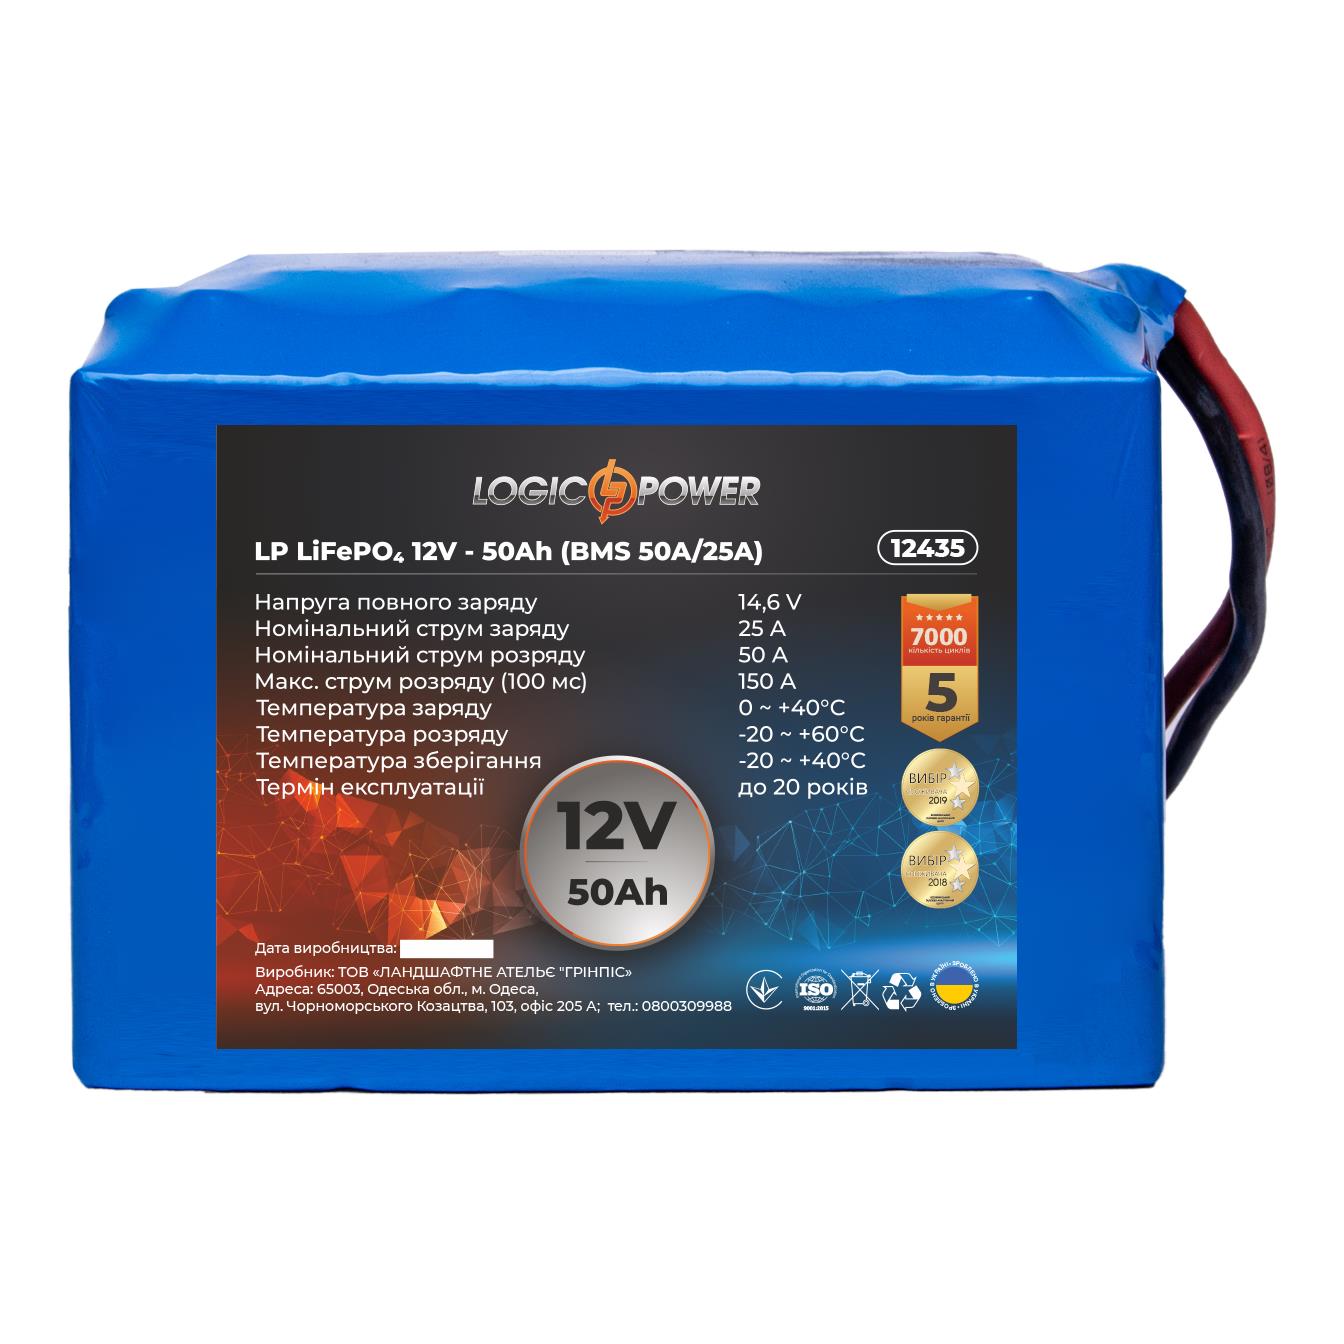 Аккумулятор литий-железо-фосфатный LogicPower LP LiFePO4 12V - 50 Ah (BMS 50A/25А) (12435)